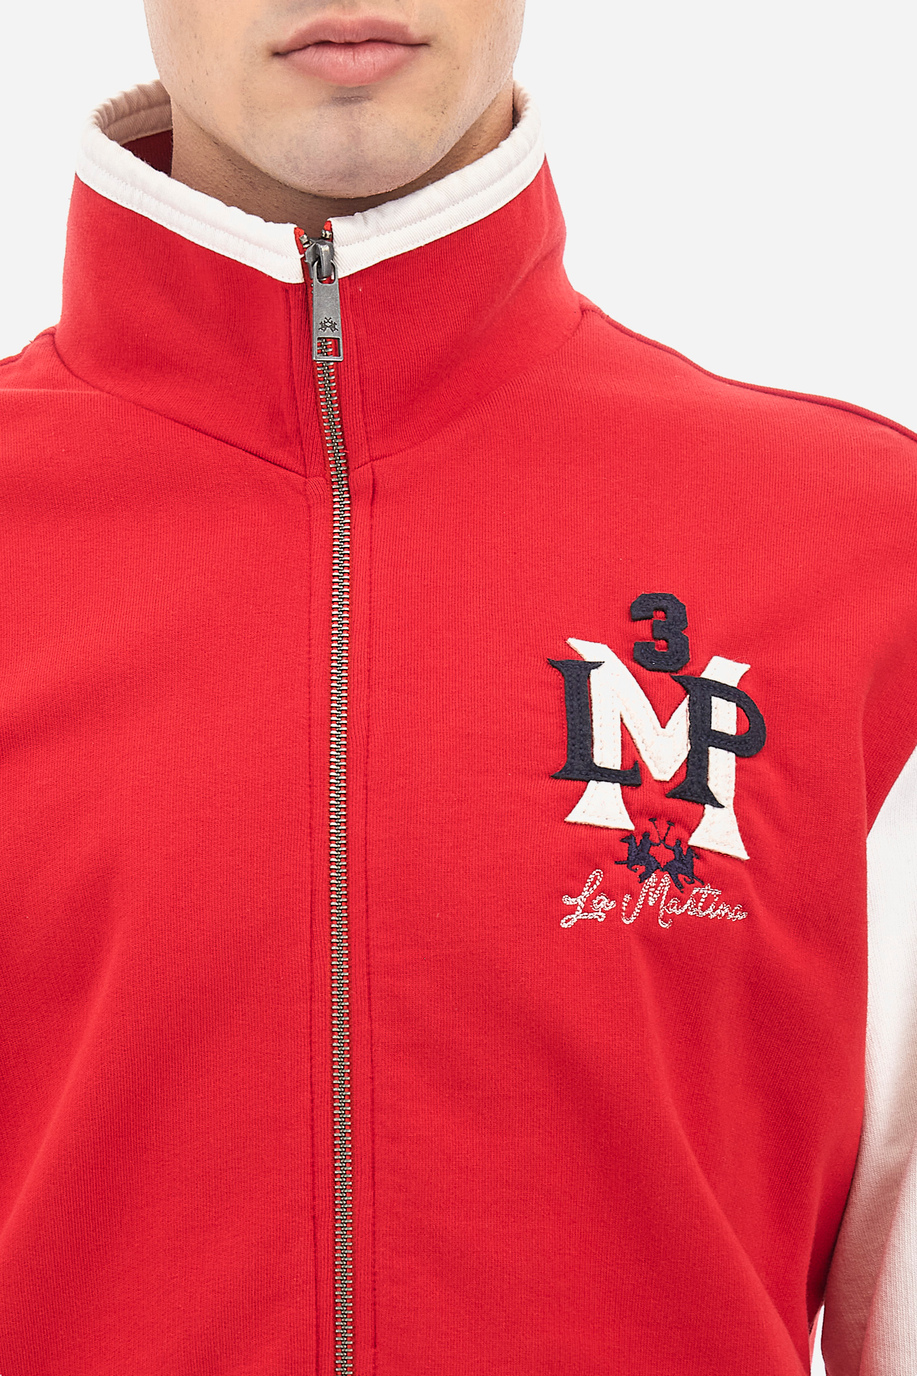 Polo Academy men's full-zip crewneck sweatshirt in color block with large logo - Vandan - Sweatshirts | La Martina - Official Online Shop